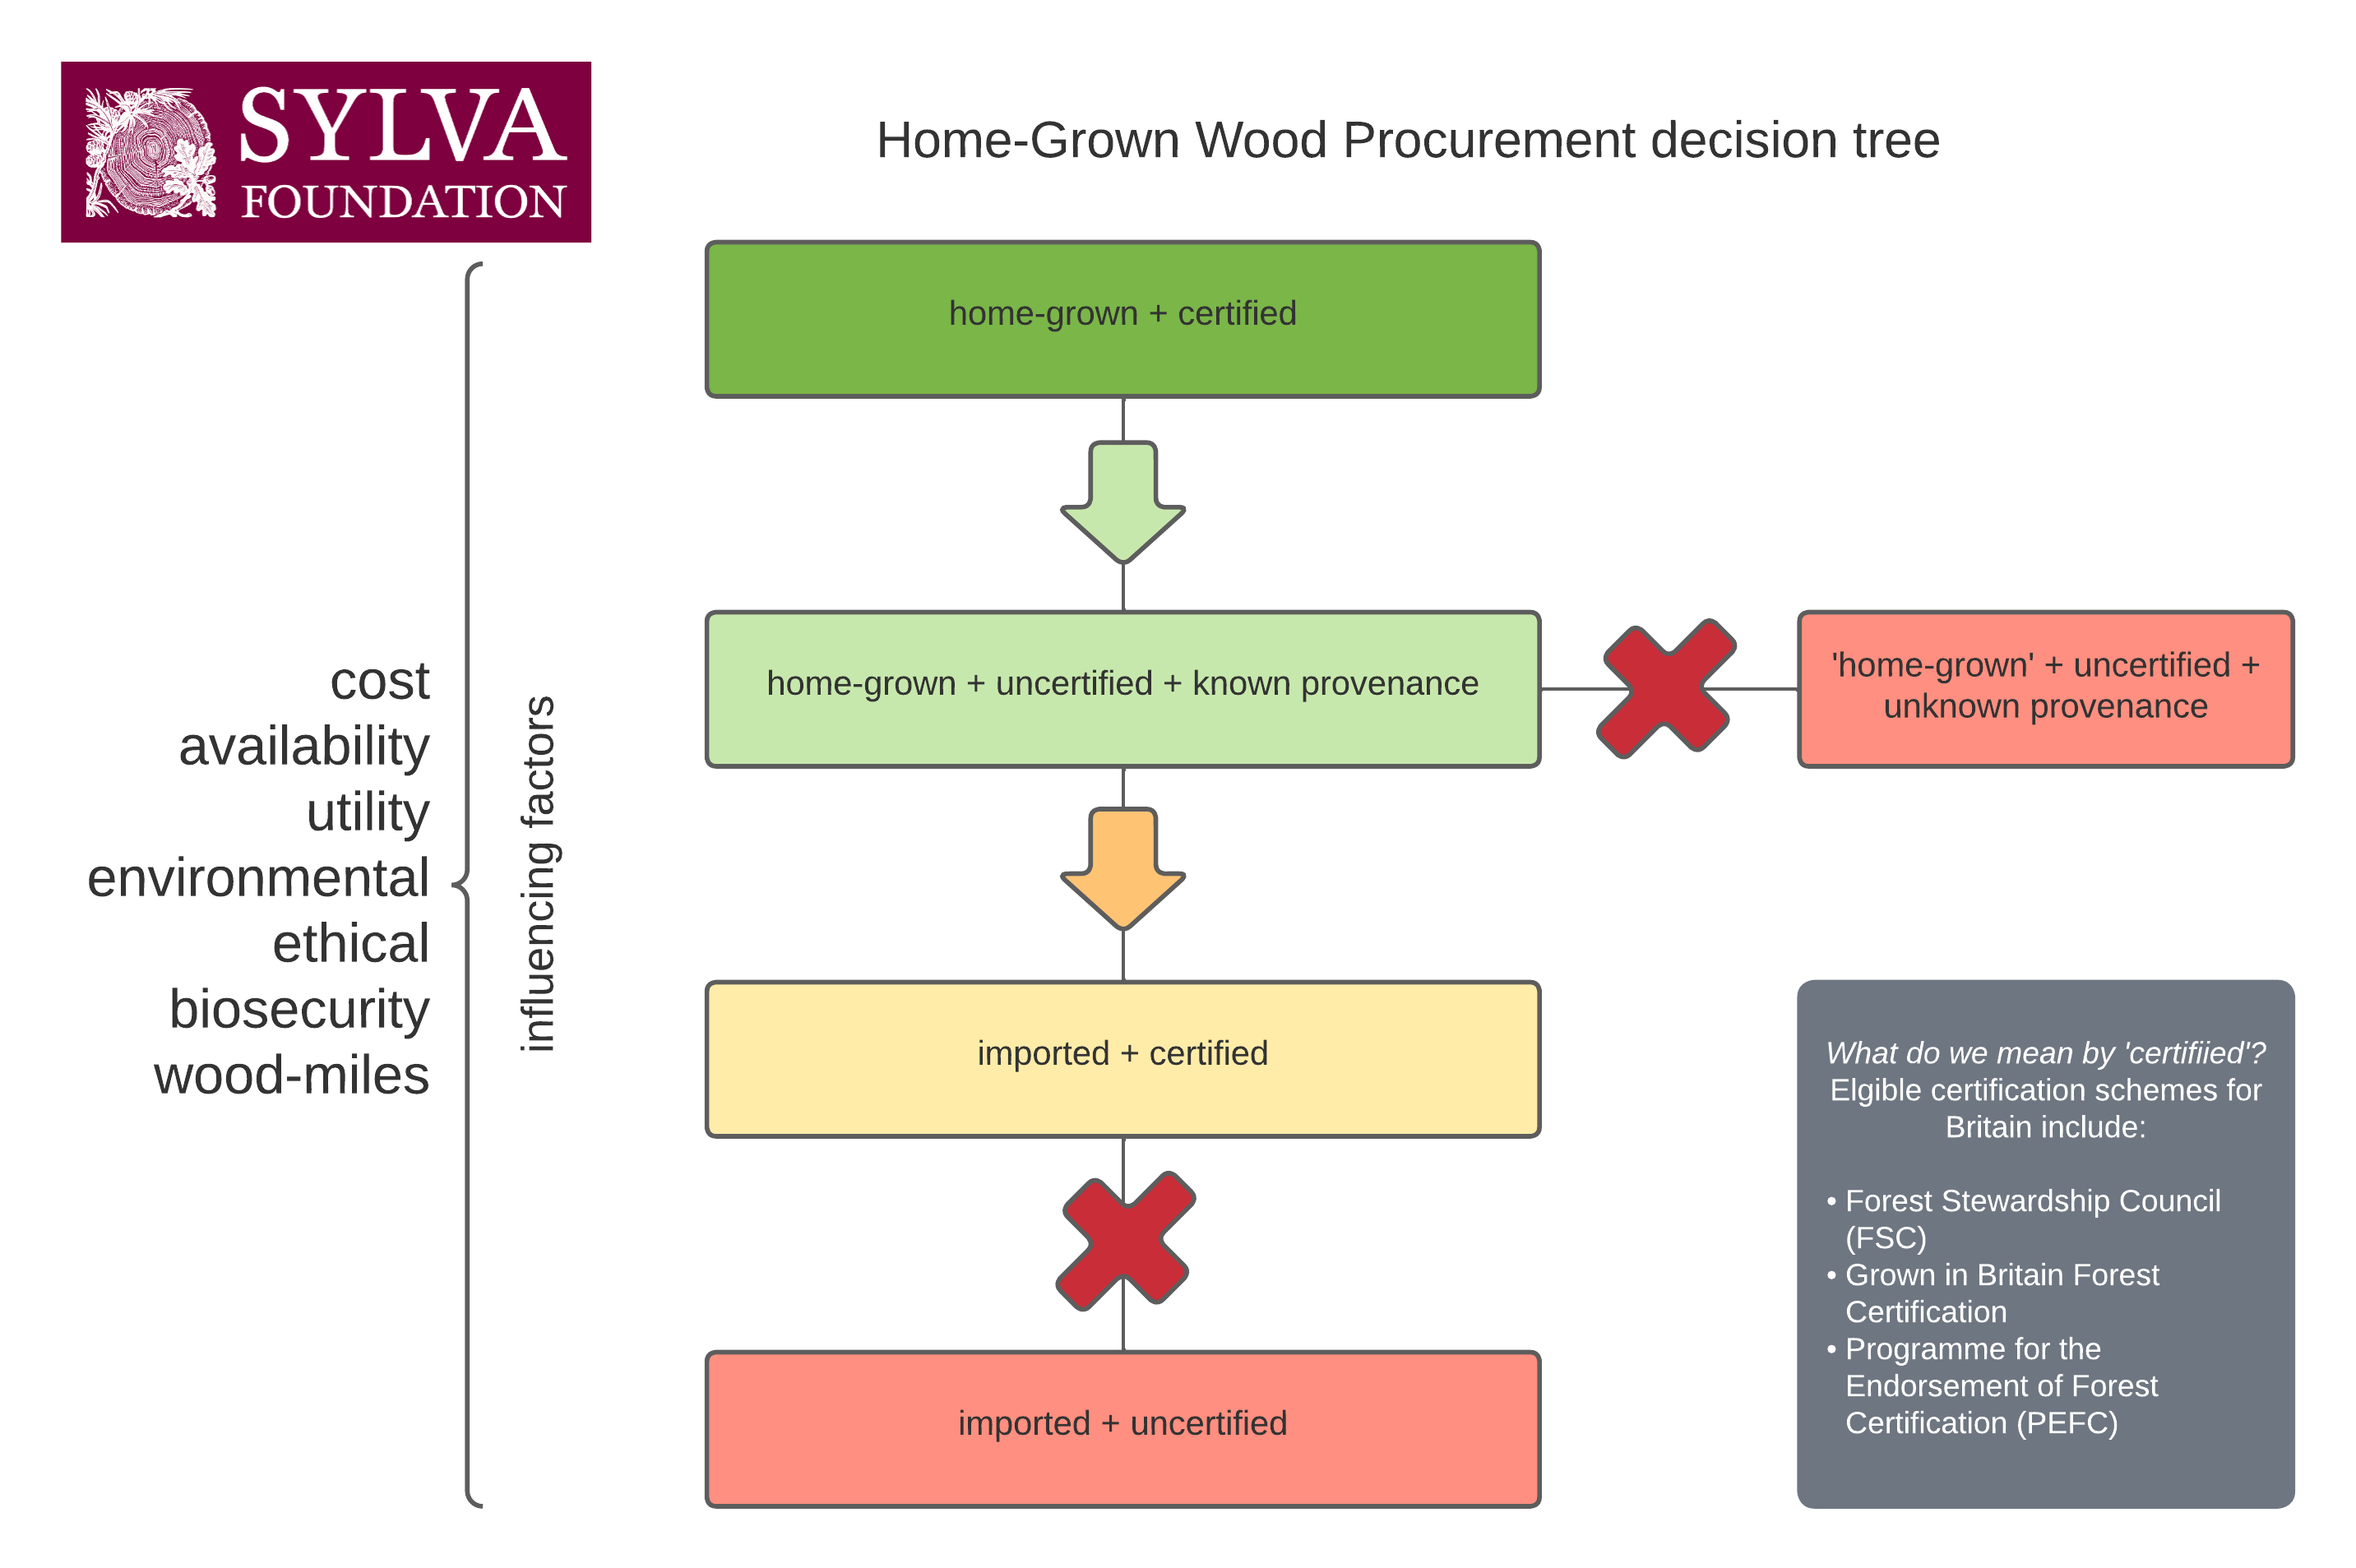 Home-Grown Wood Procurement - decision tree